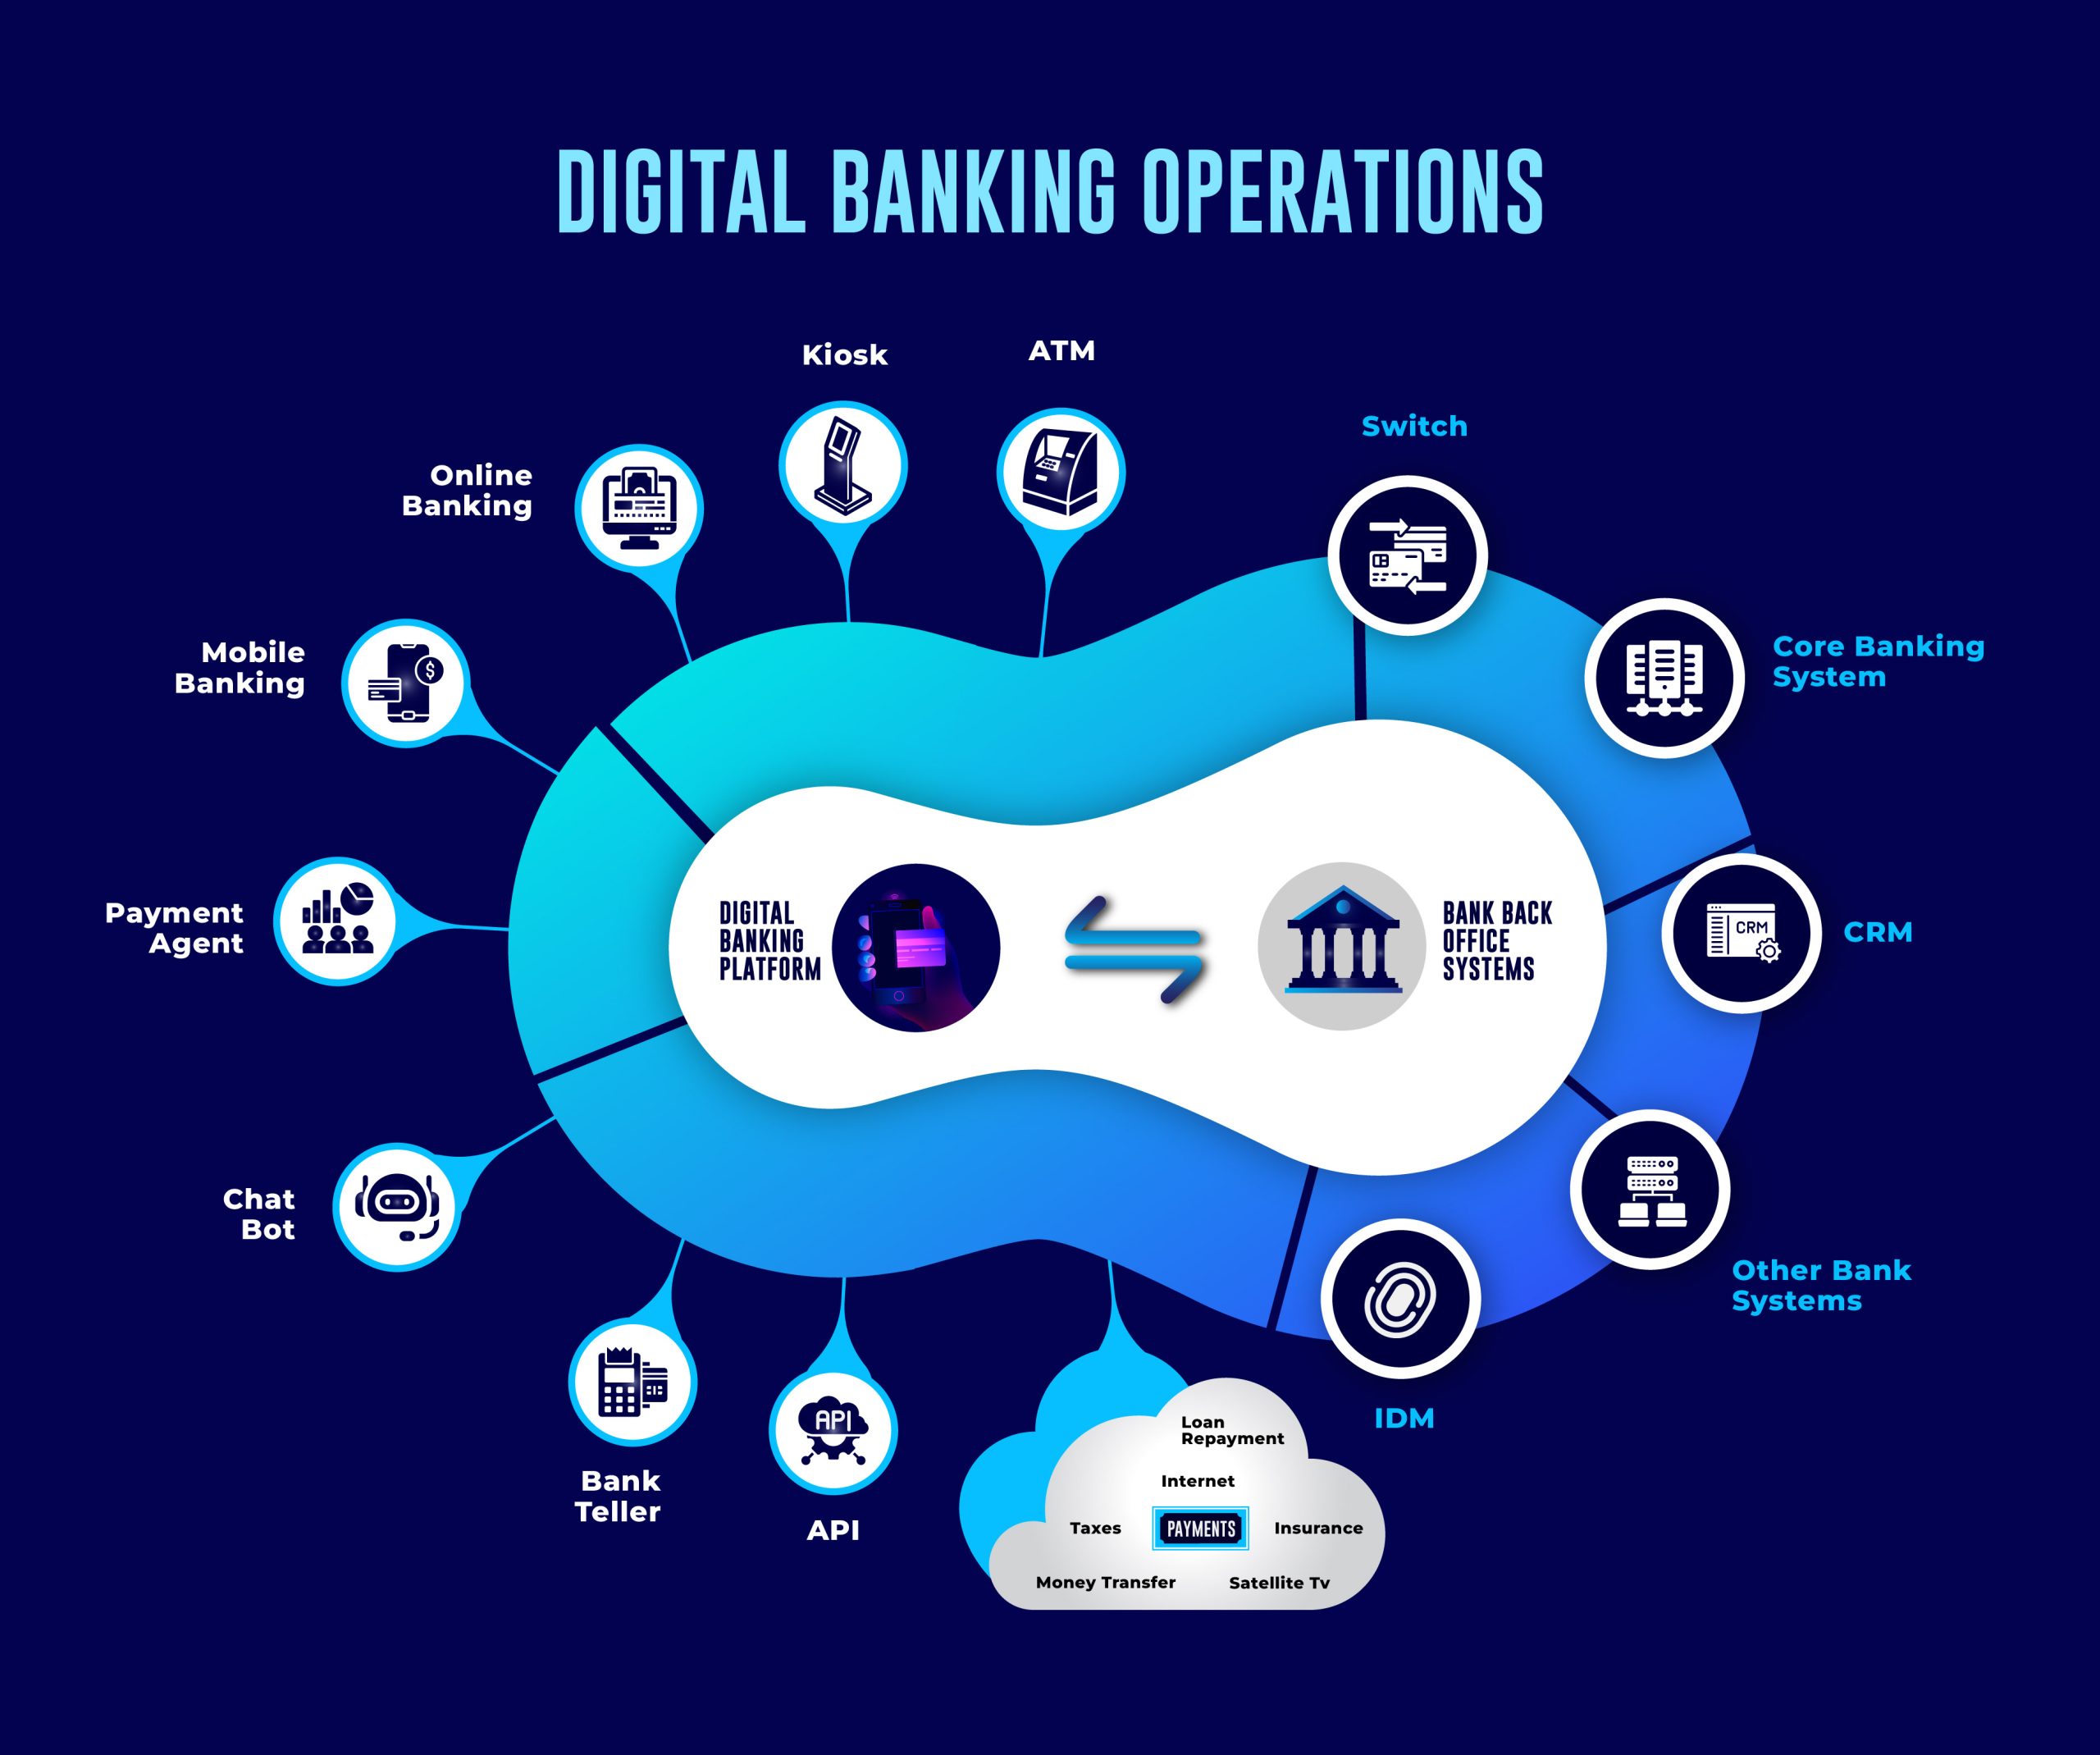 Future-ready Digital Banking Operations